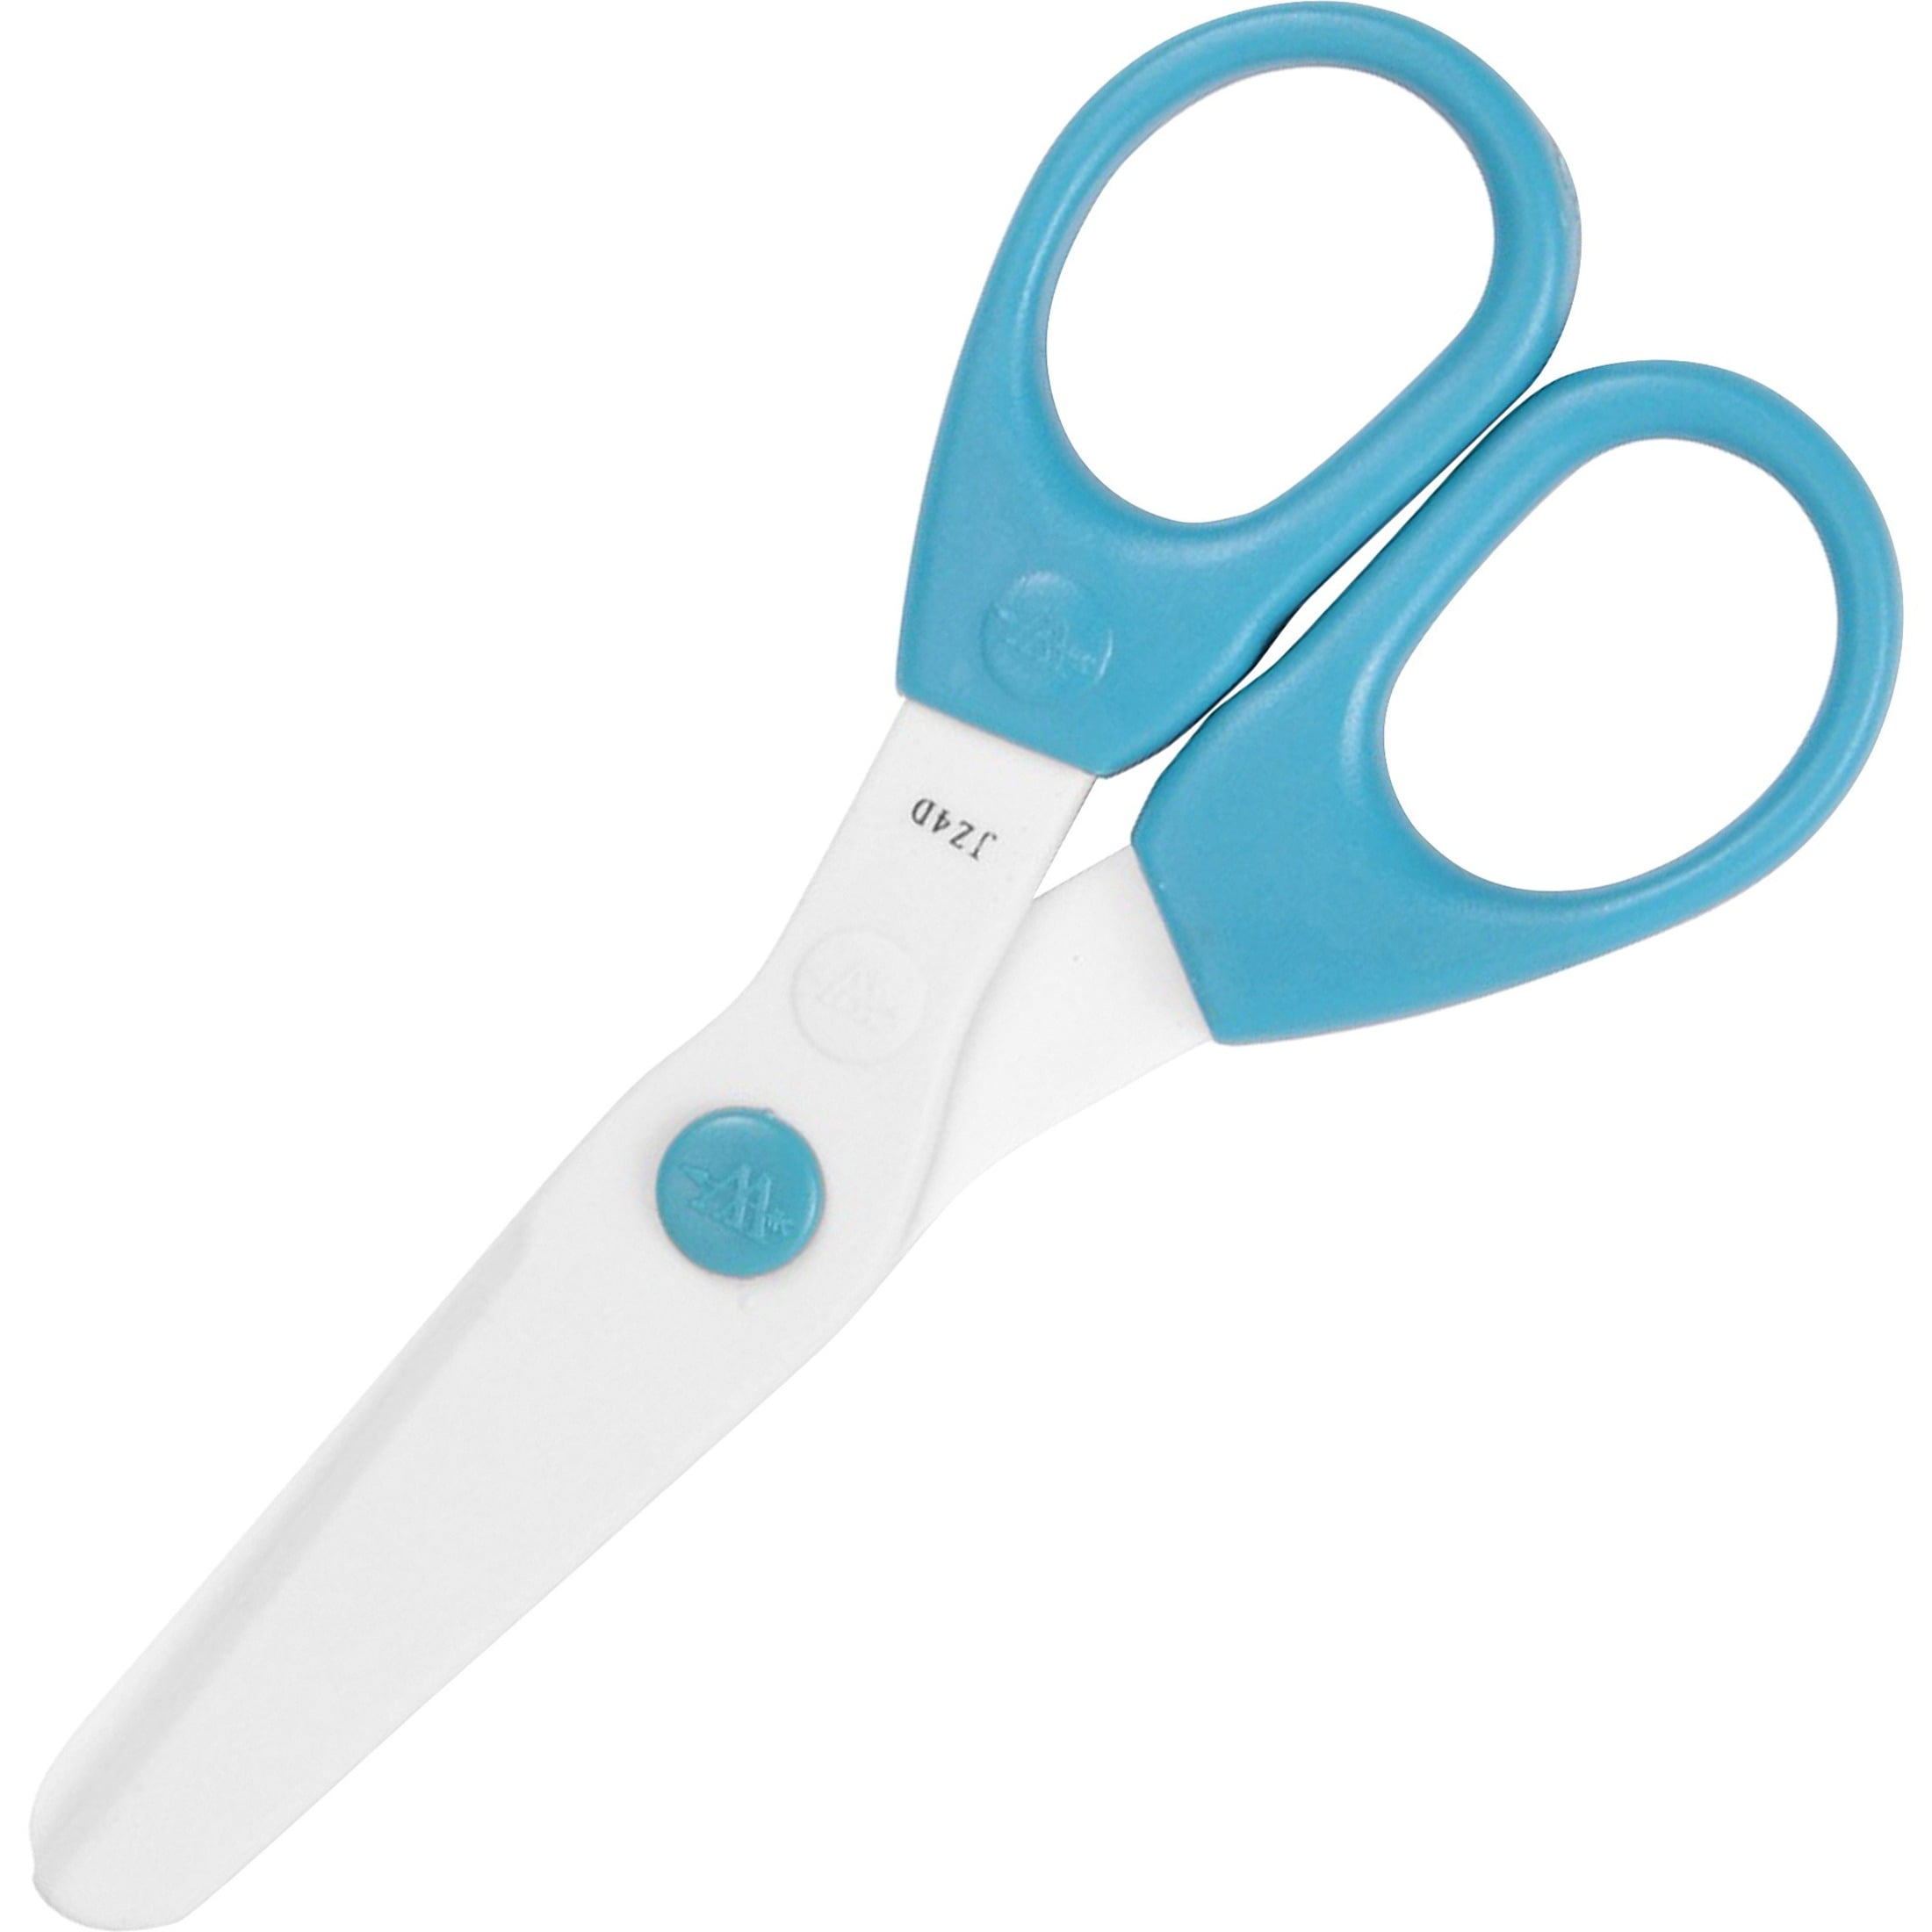 Kids scissors,Child scissors,scissors for school,Girls scissors,Safety  scissors suitable for kids ages 4-8,girl's gift,Color PURPLE